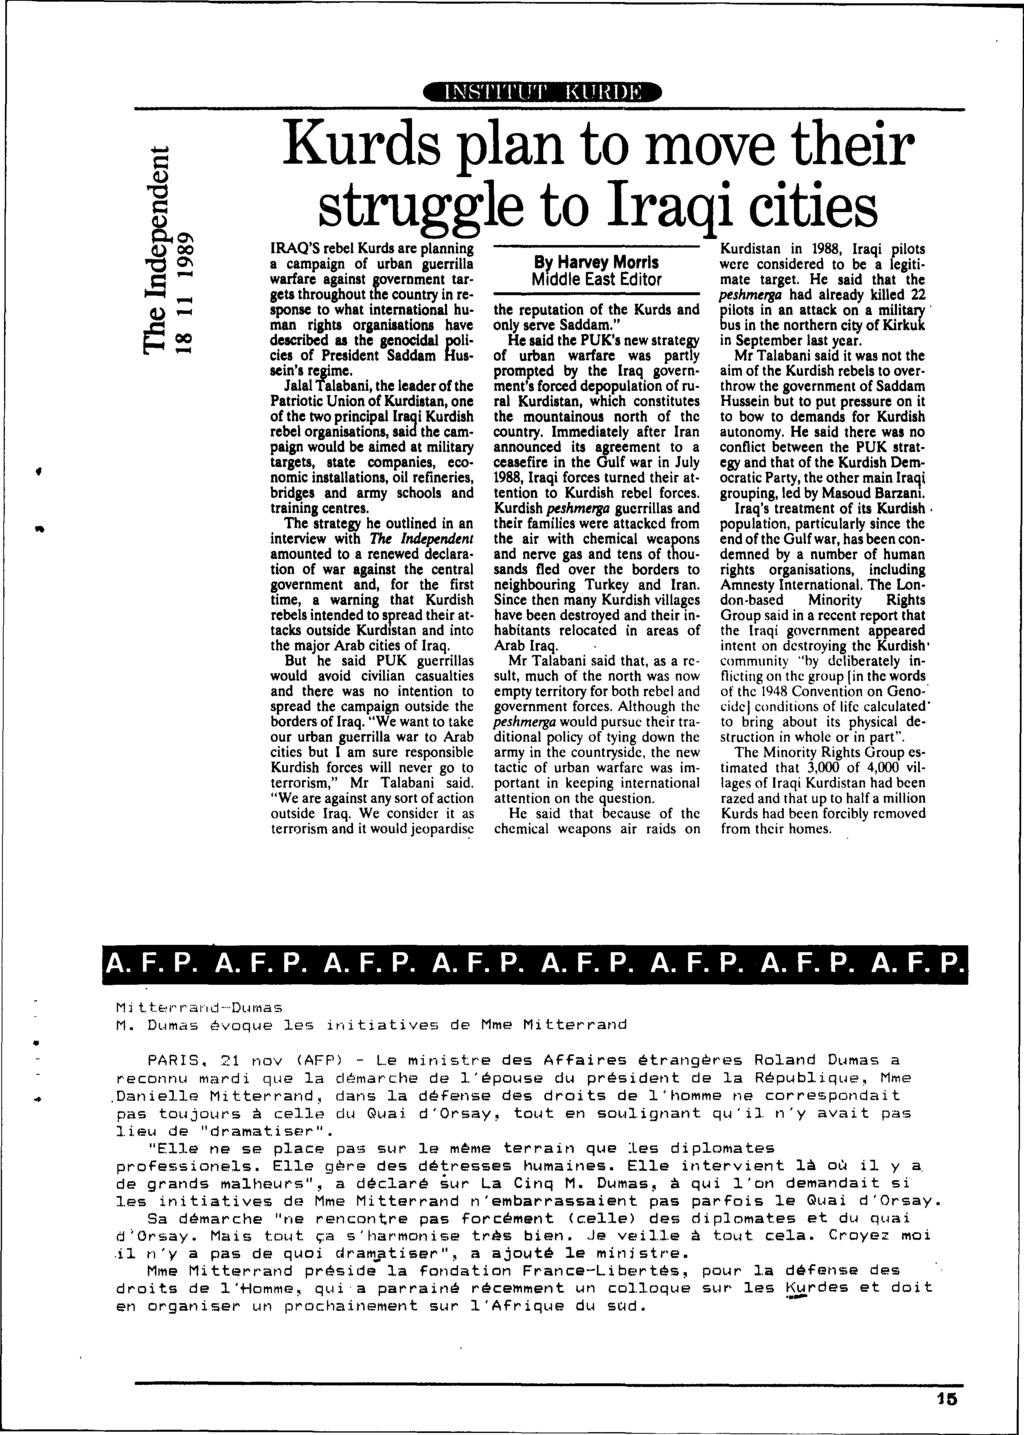 f INHTITUT I(lTI{D~: Kurds plan to move their struggle to Iraqi cities IRAQ'S rebel Kurds are planning ------------ Kurdistan in 1988, Iraqi pilots a campaign of urban guerrilla By Harvey Morris were